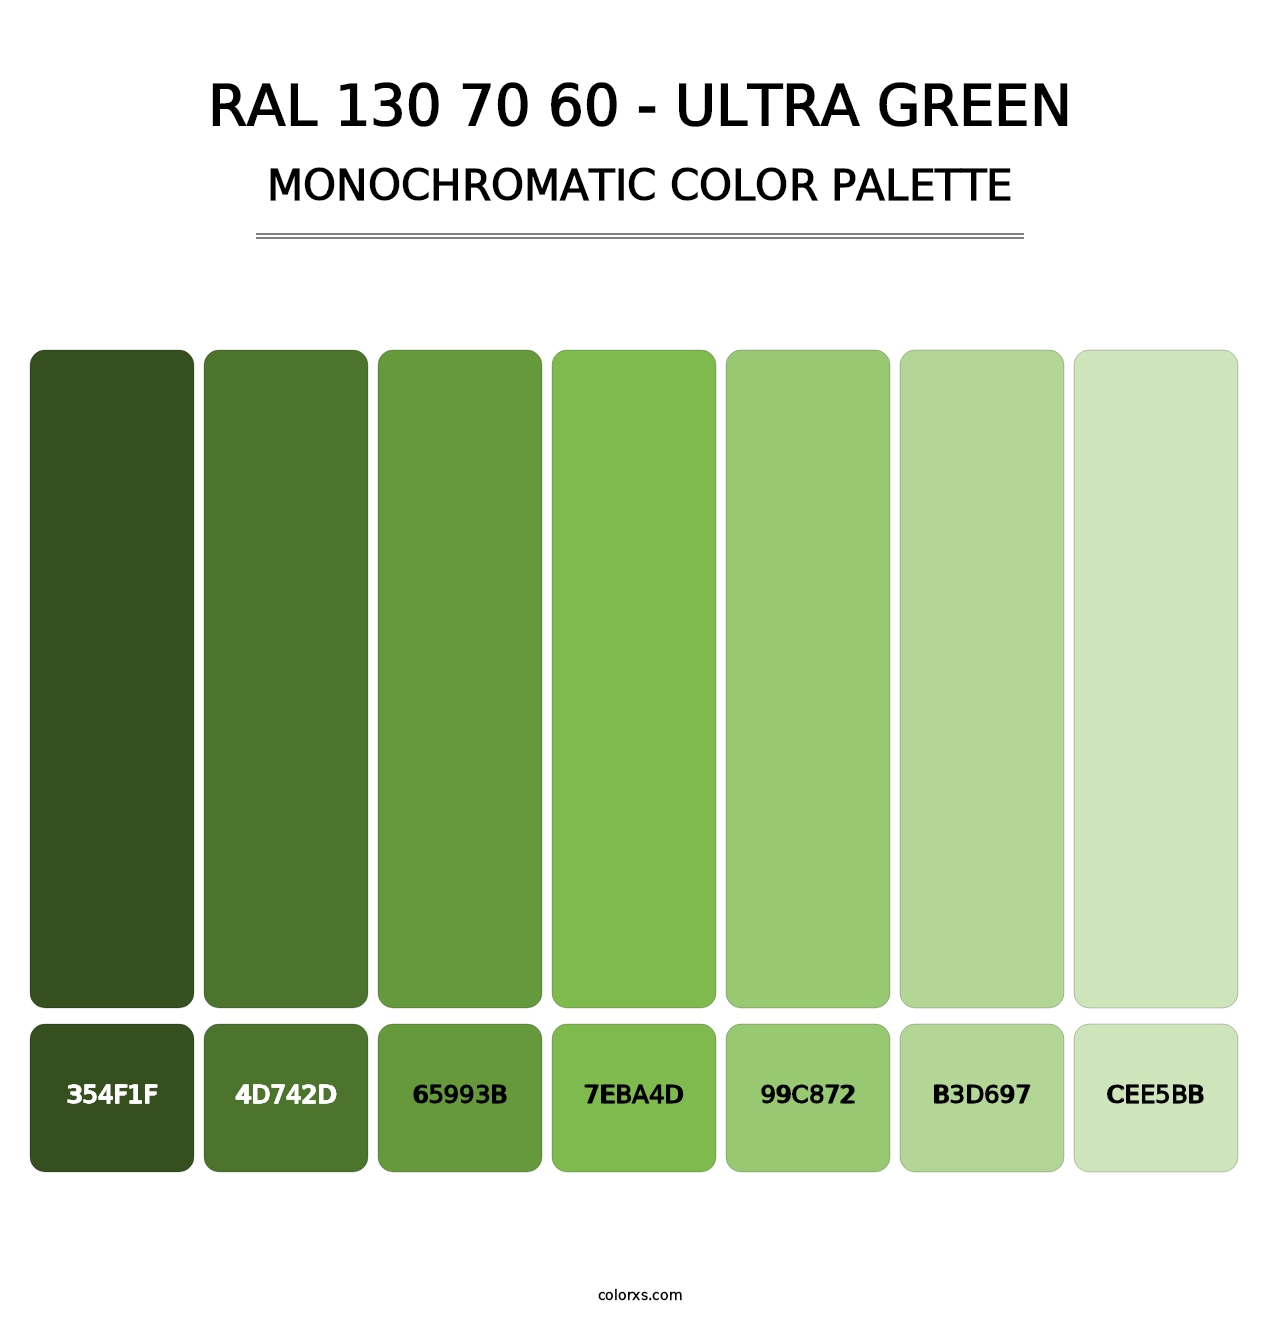 RAL 130 70 60 - Ultra Green - Monochromatic Color Palette